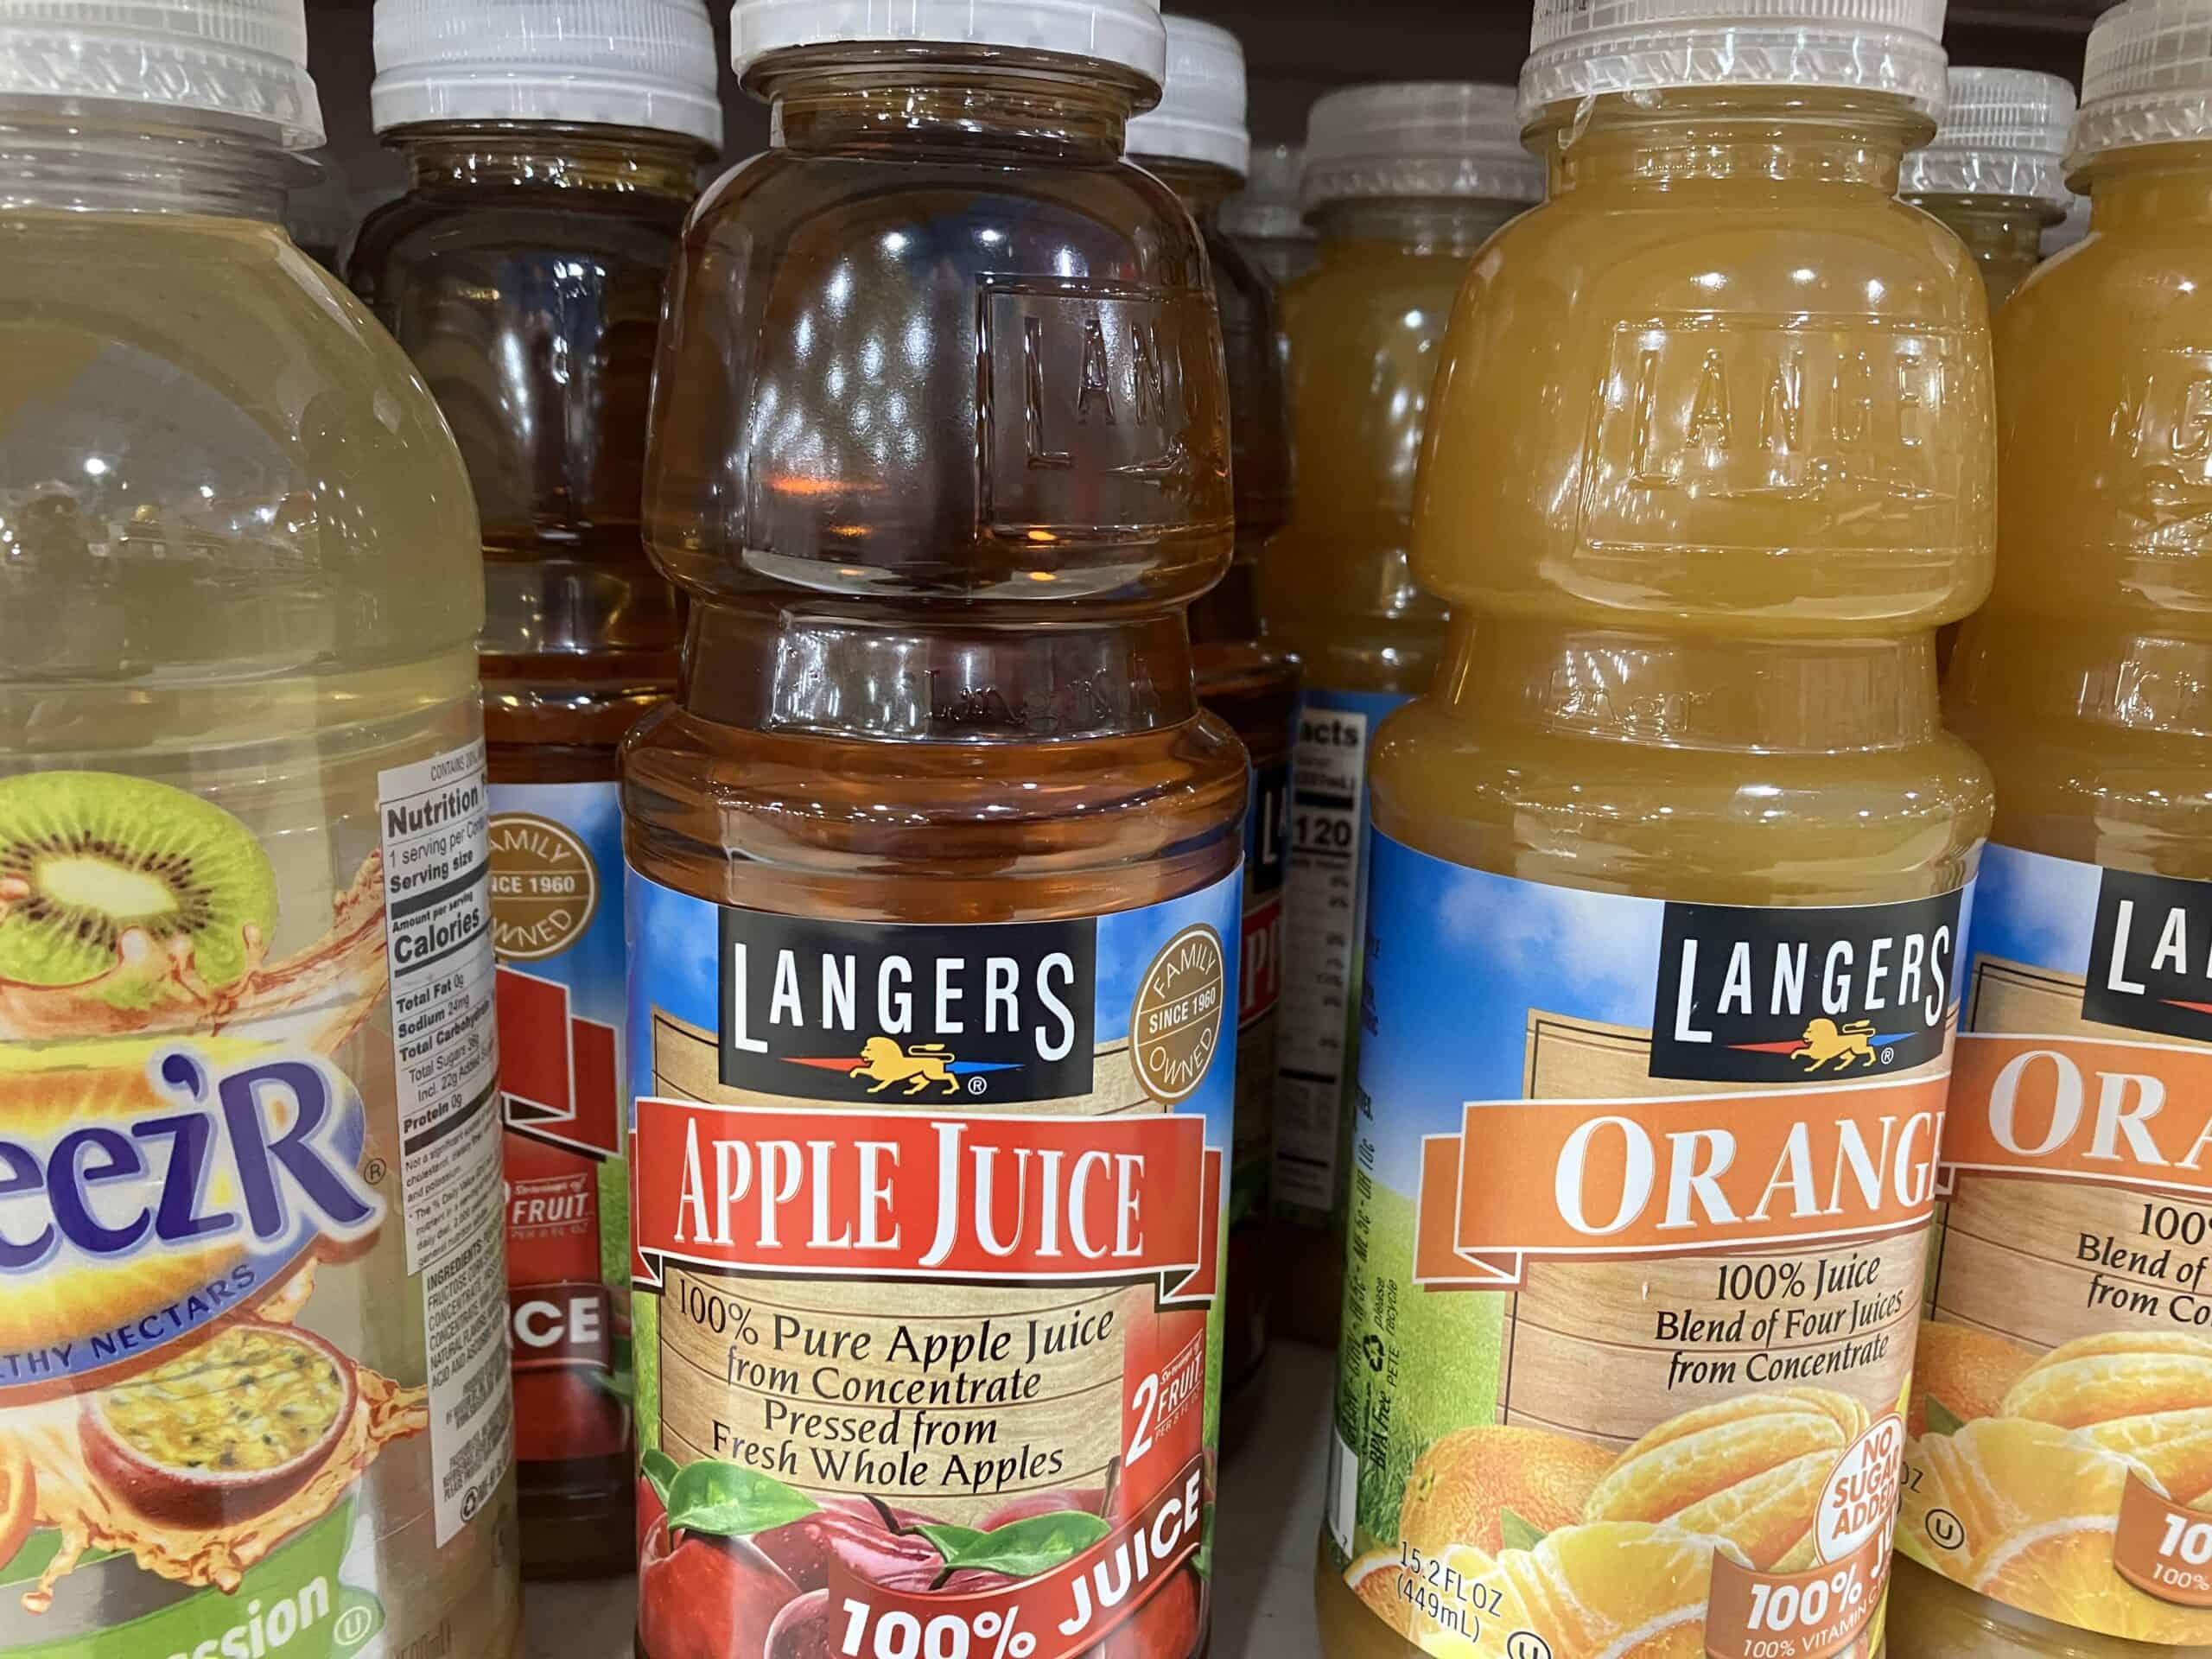 Langers apple juice